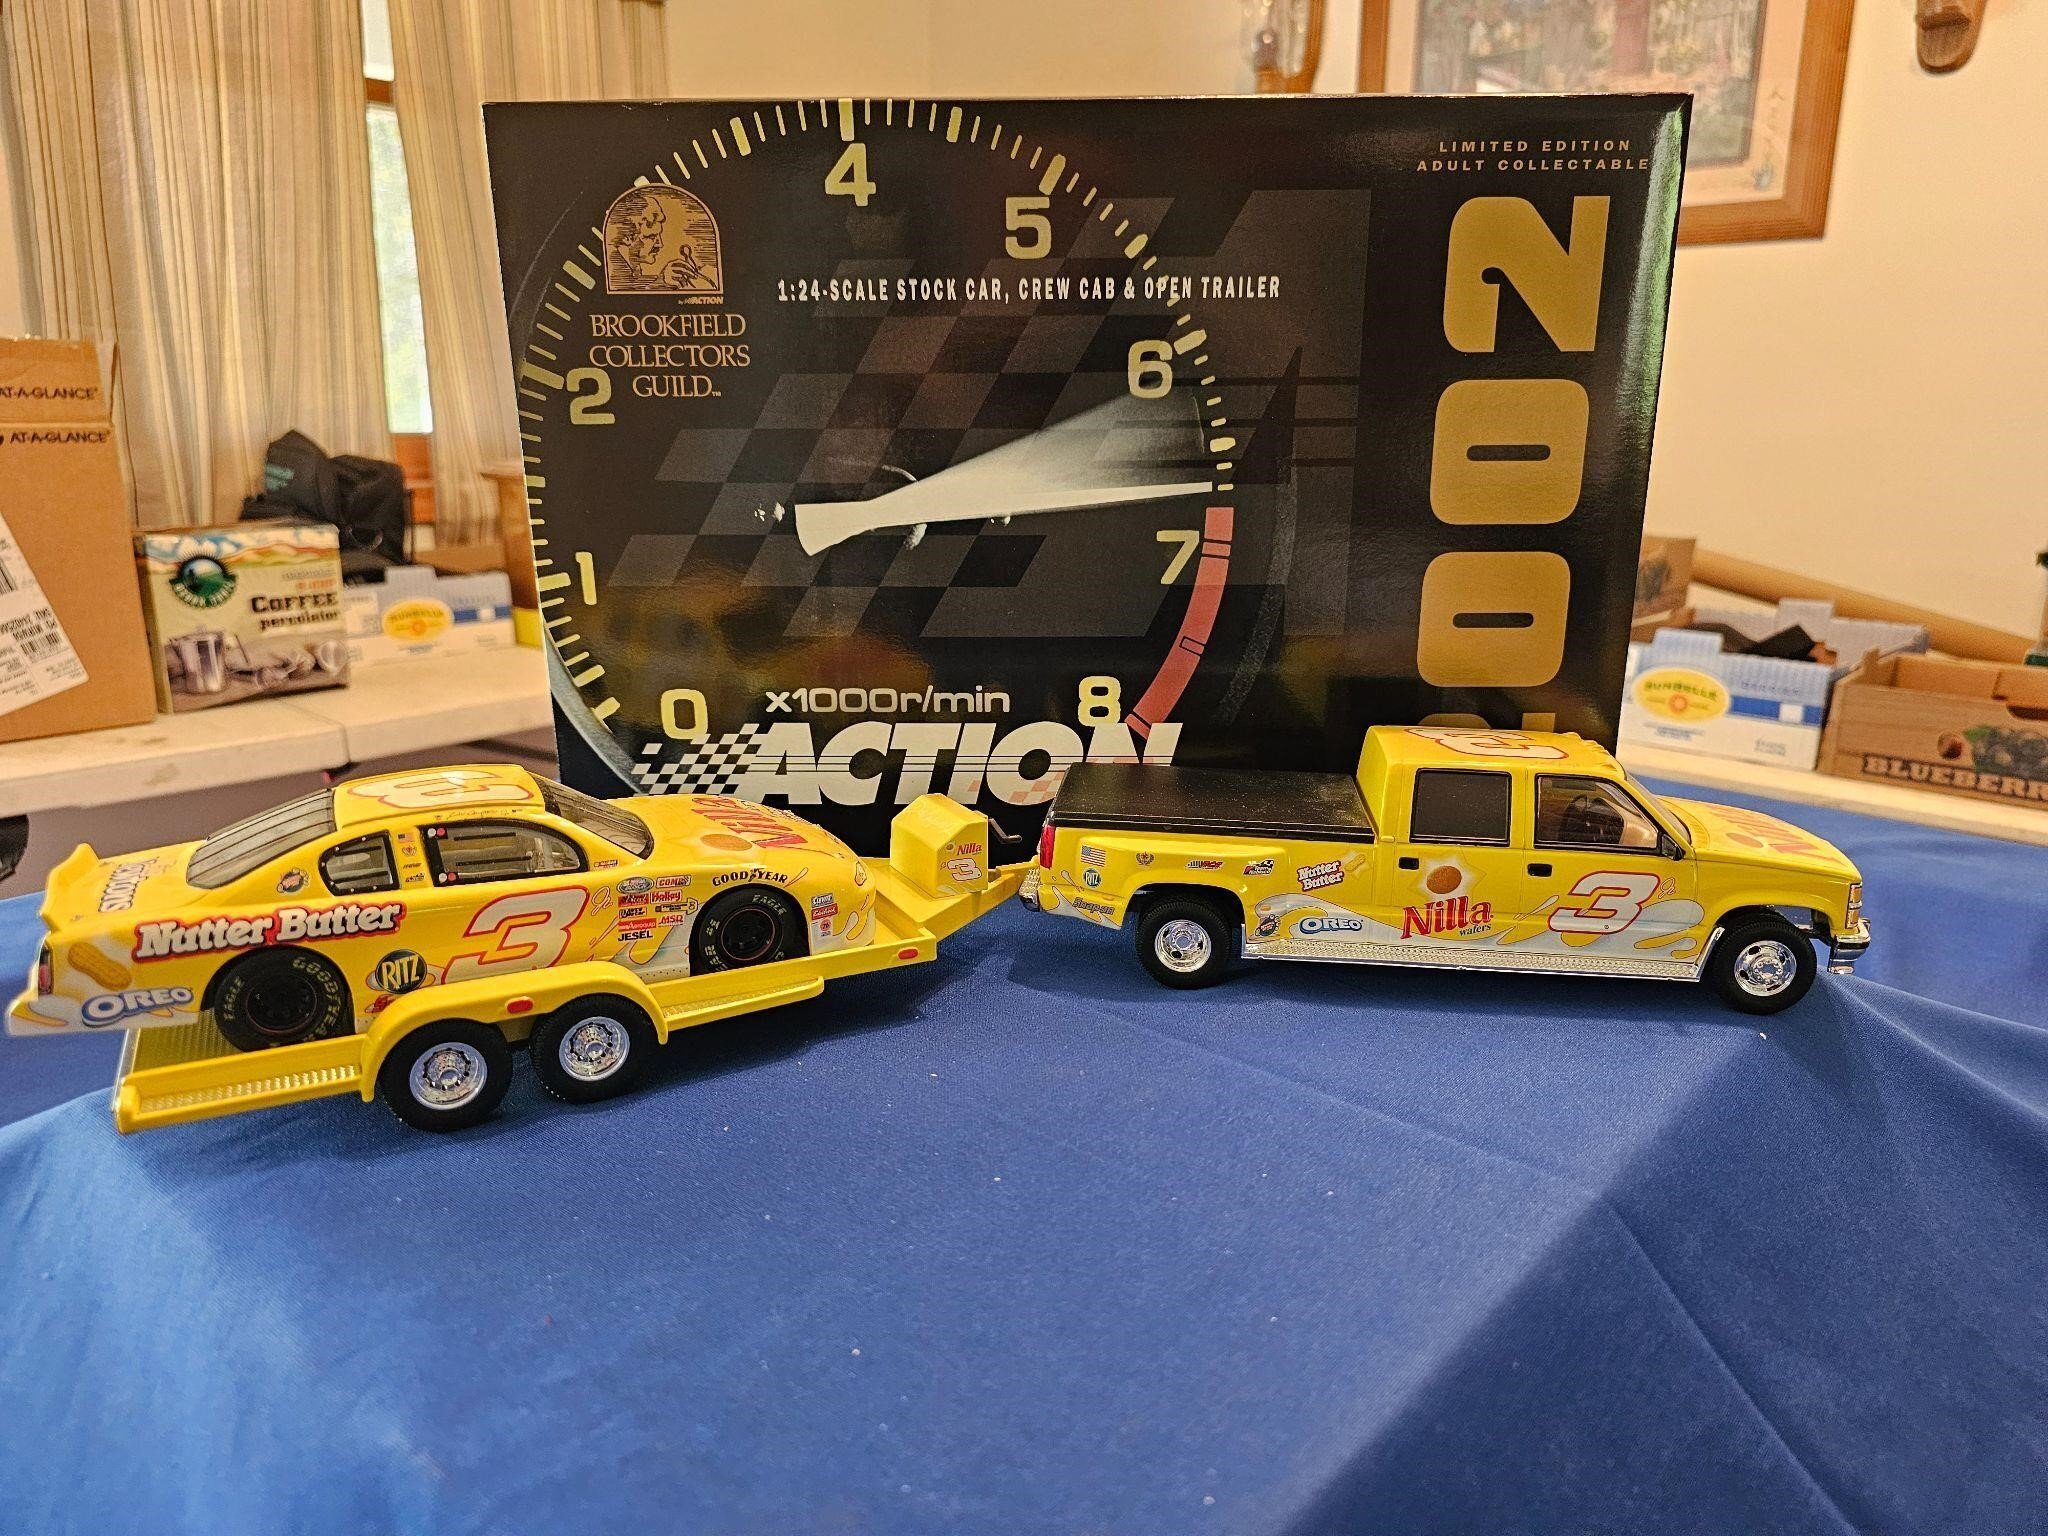 Nascar 1: 24 - Scale nStock Car, Crew Cab LTD.